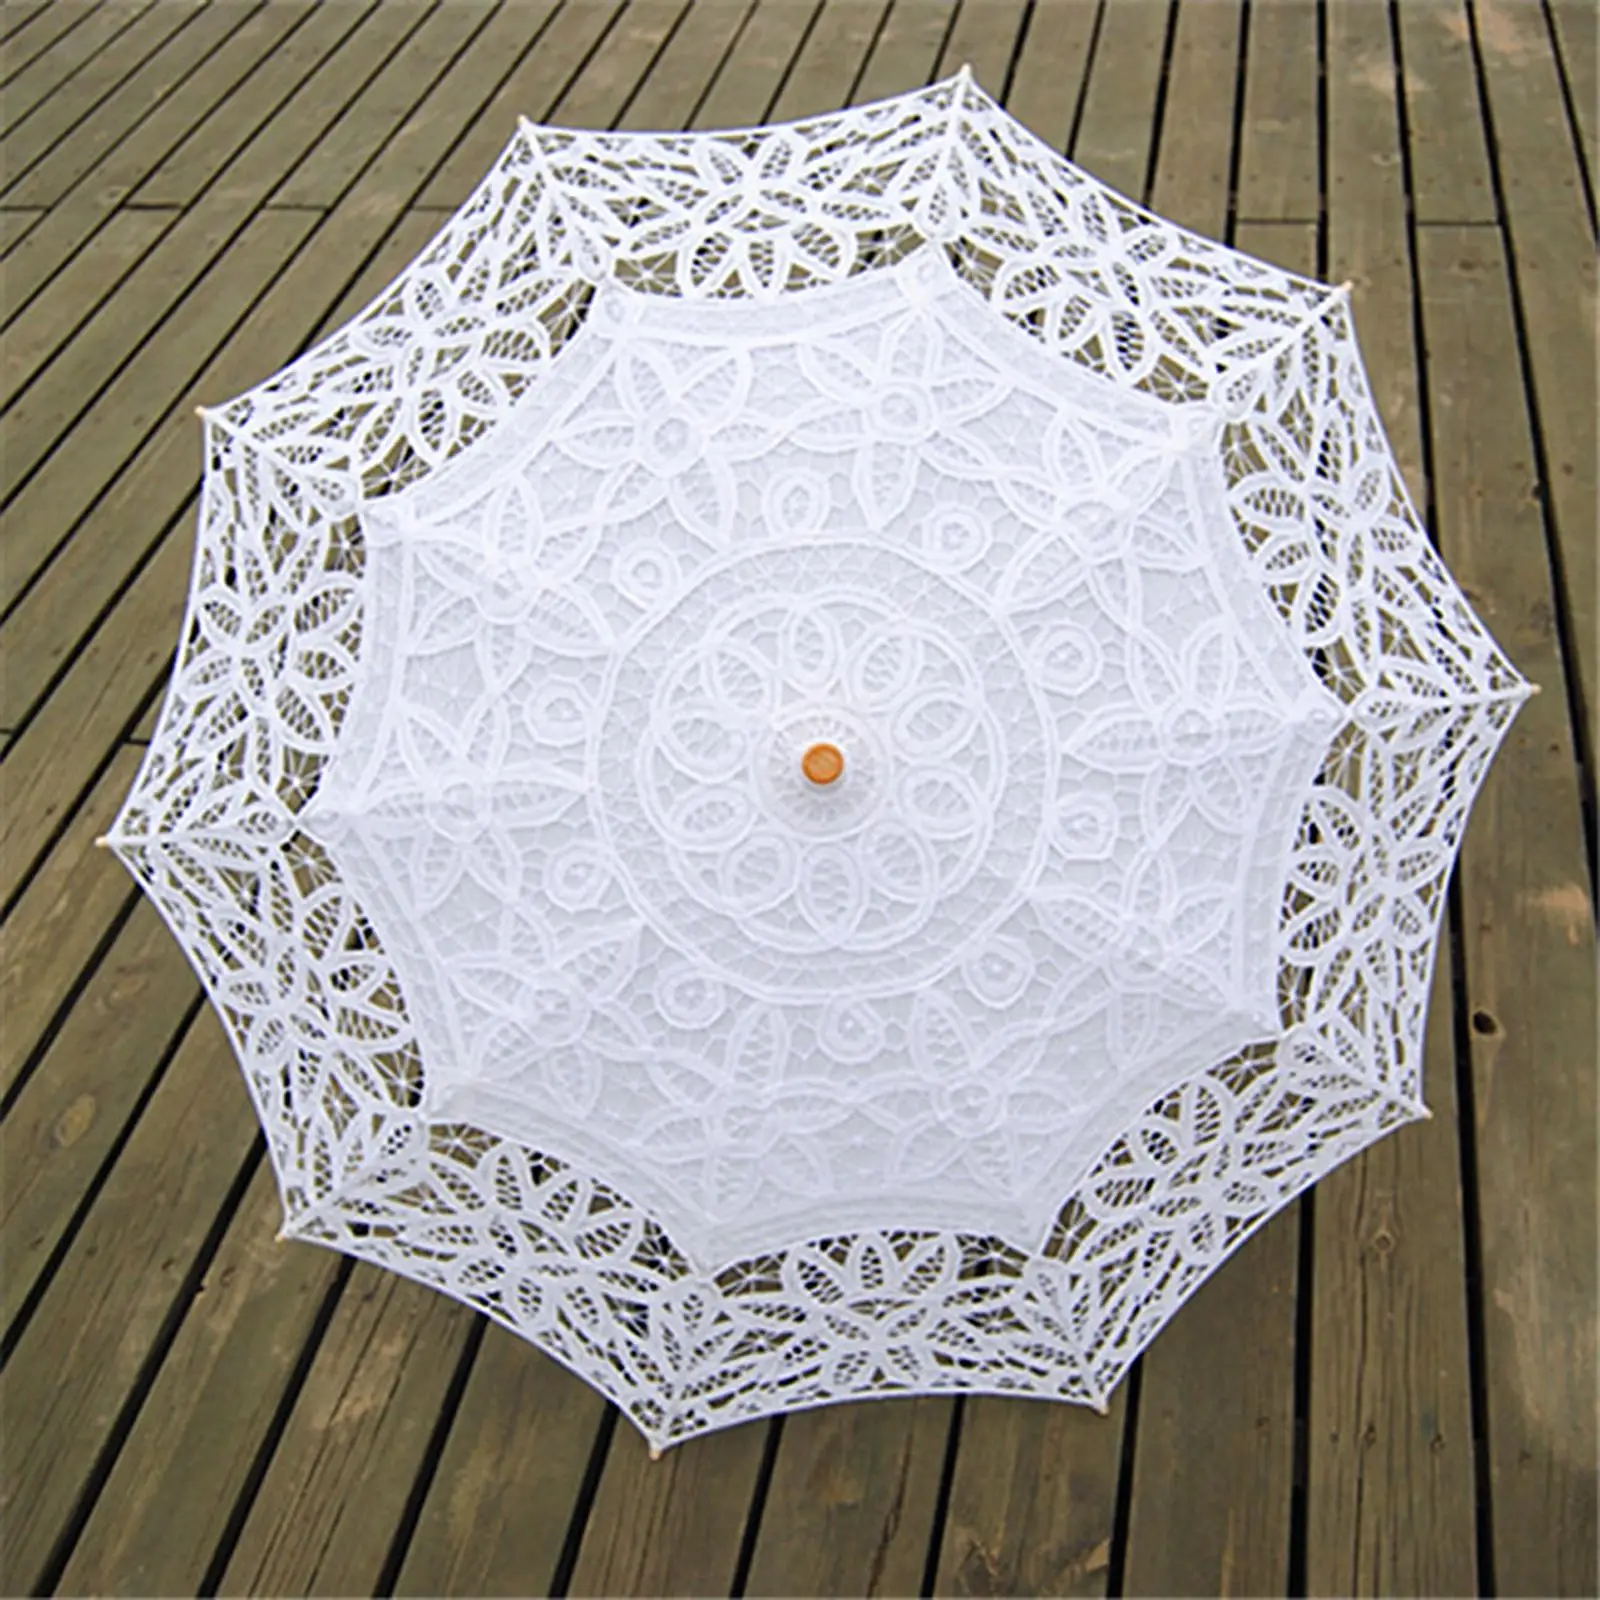 Lace flower girl parasol white wedding party bridal umbrella tree